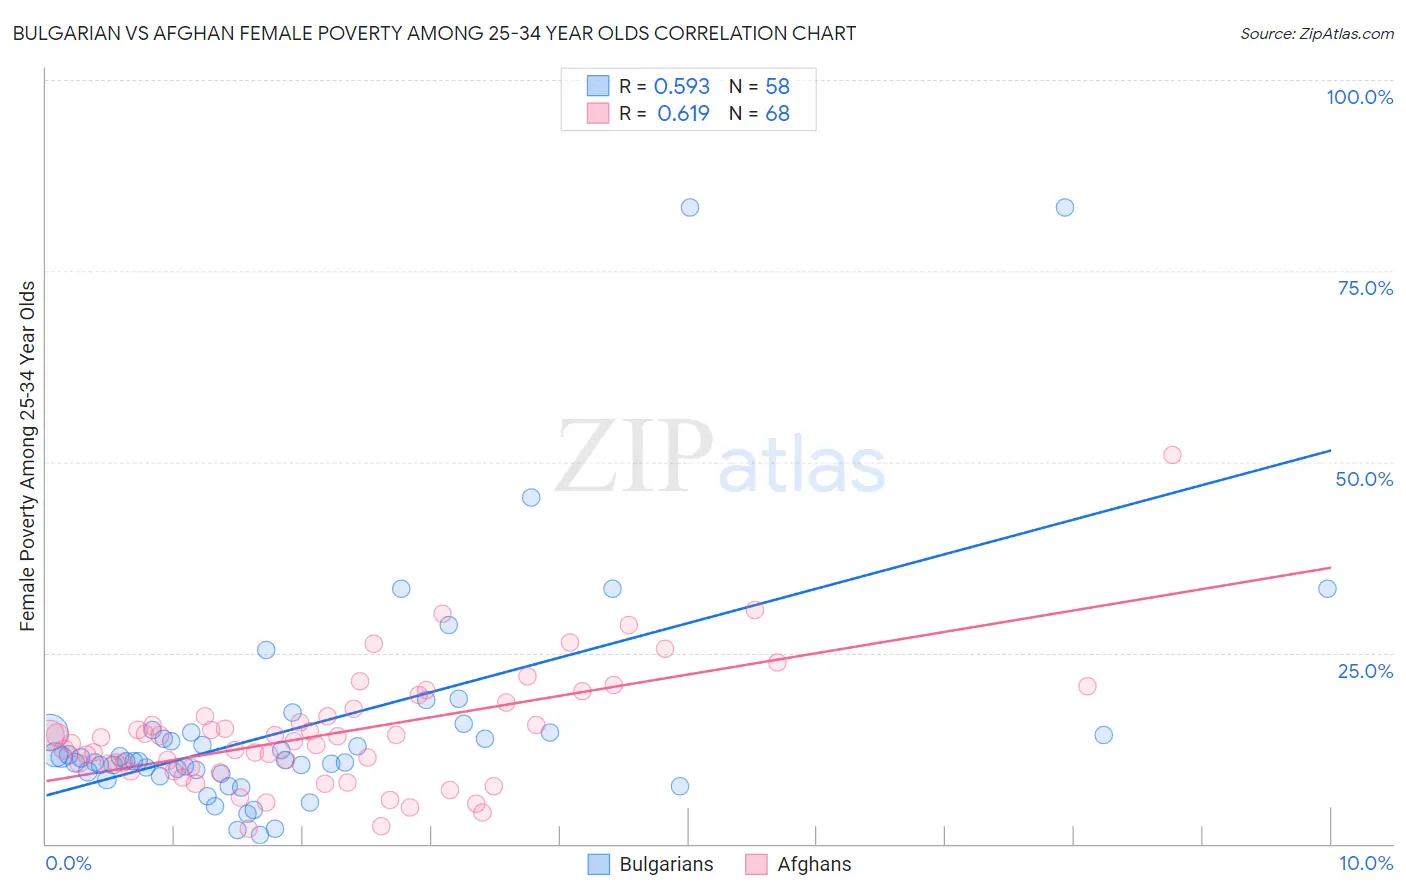 Bulgarian vs Afghan Female Poverty Among 25-34 Year Olds